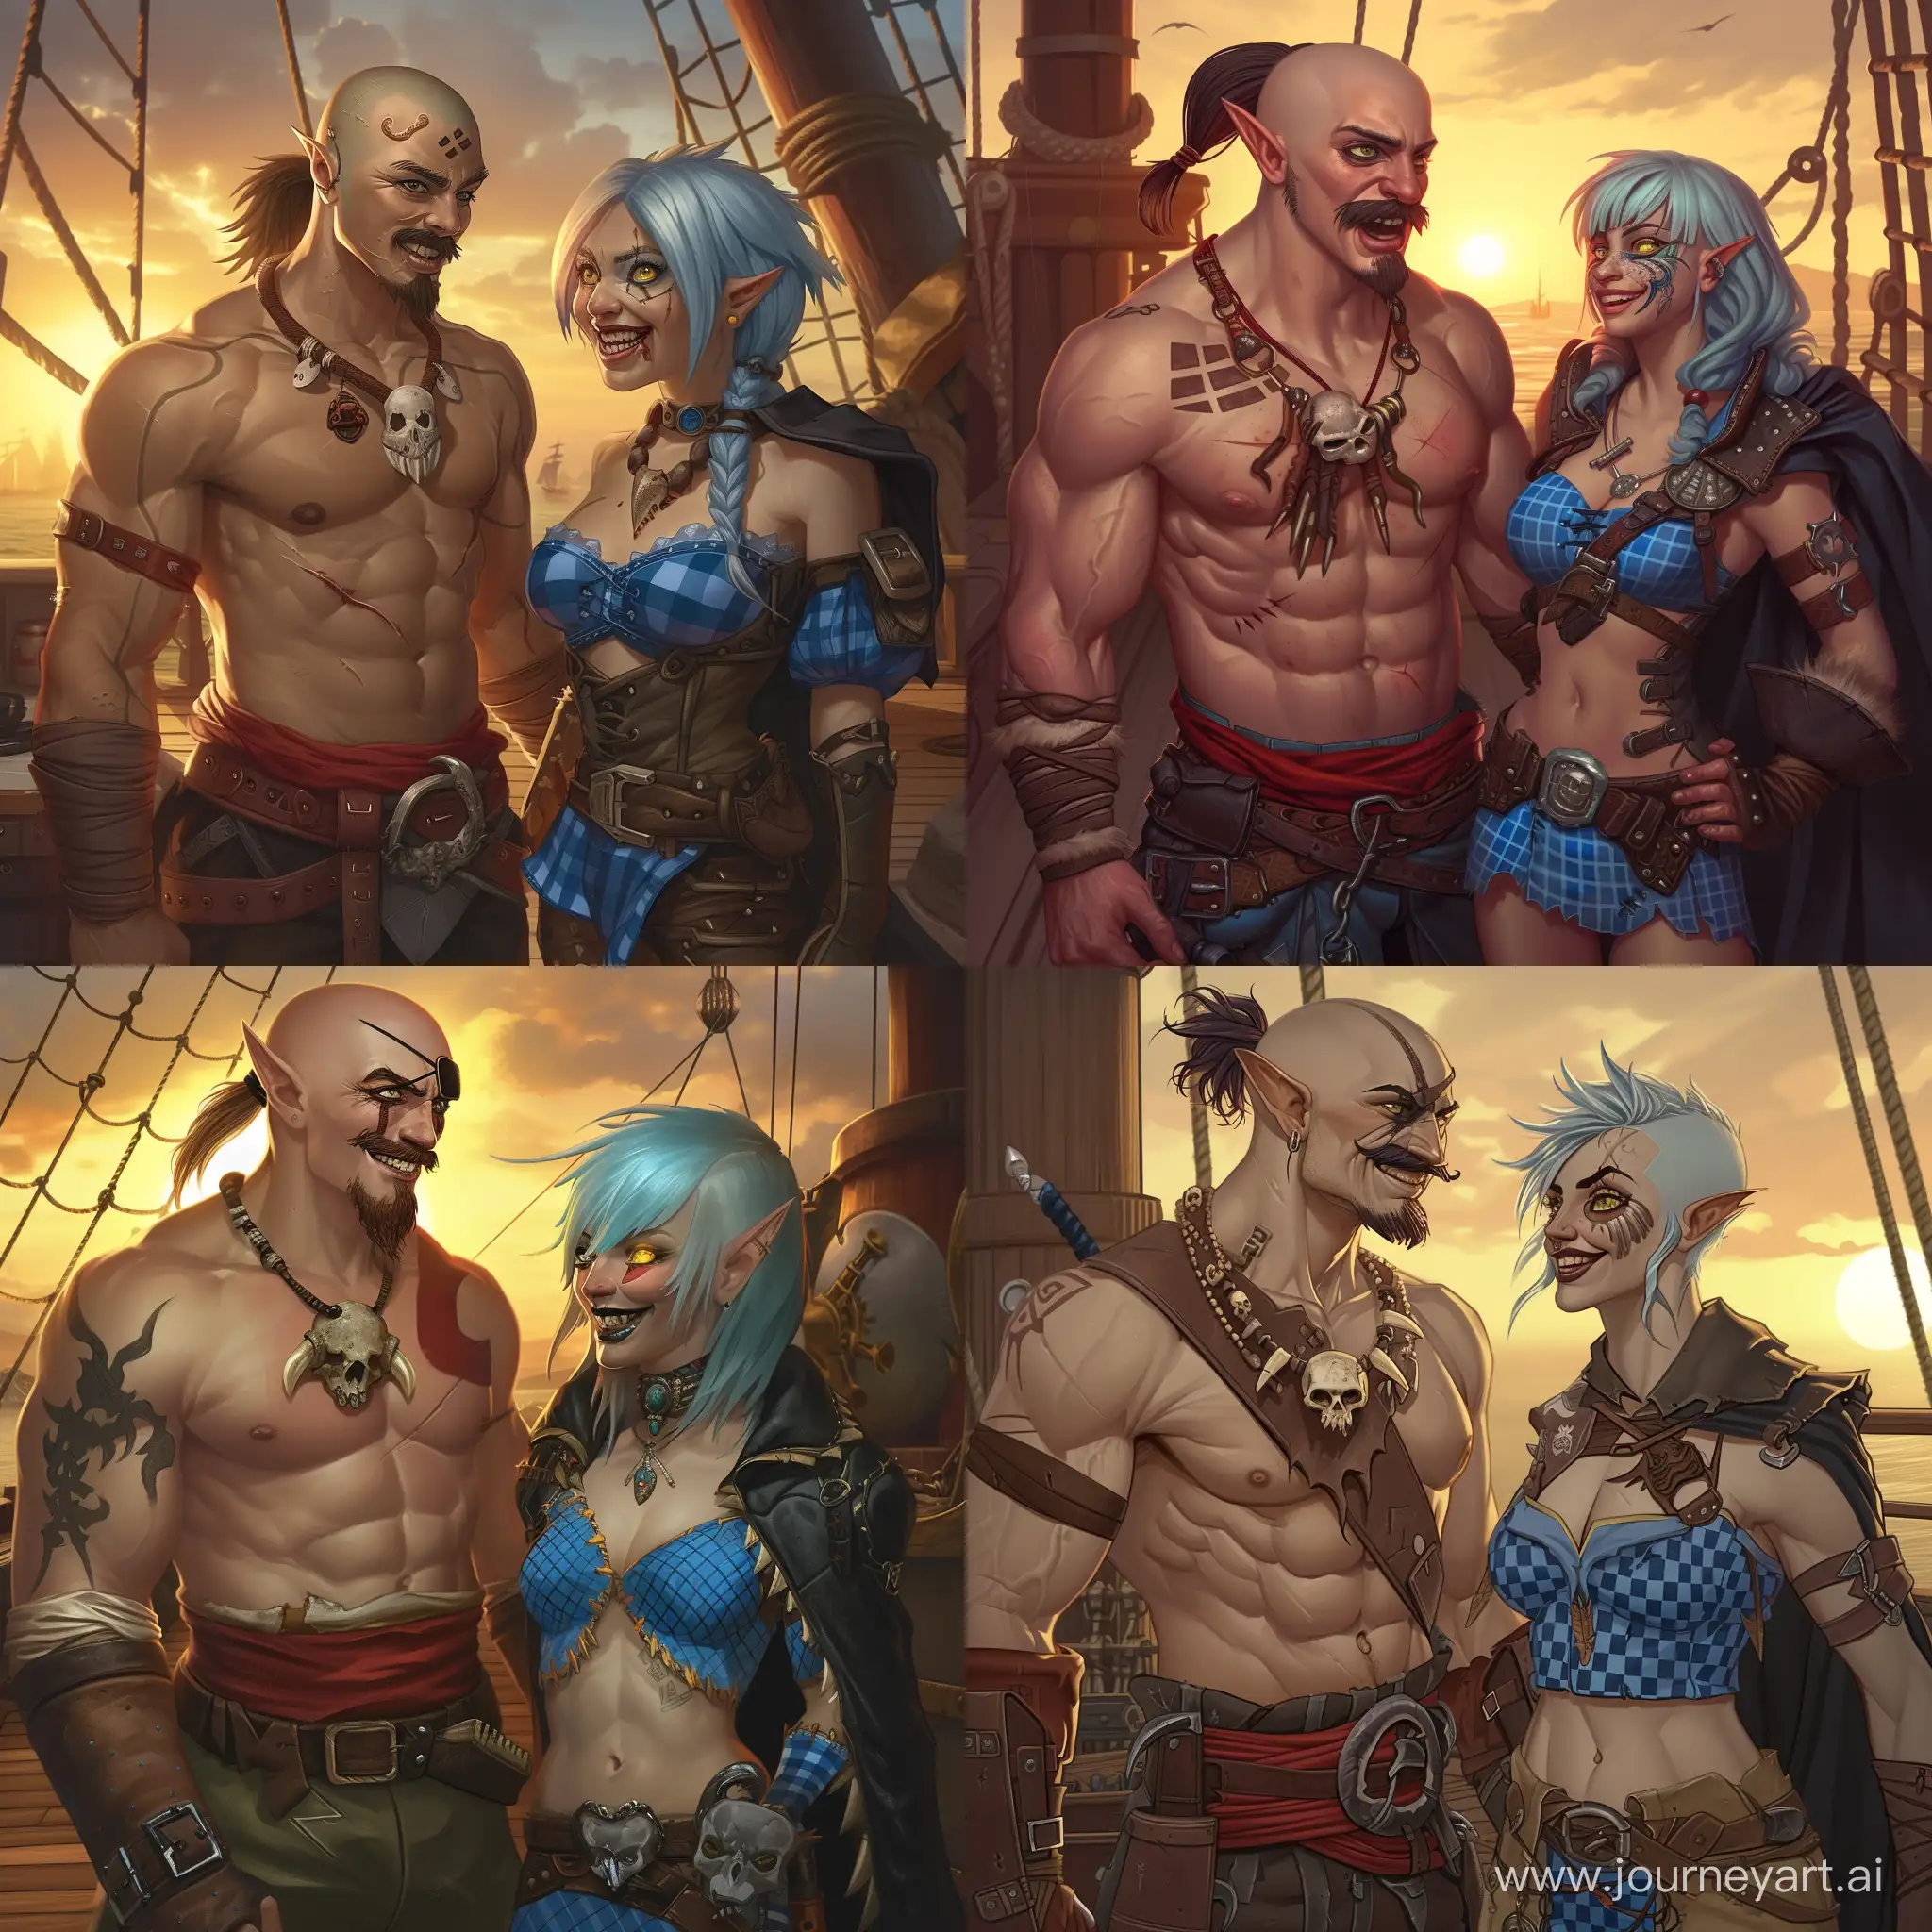 Muscular-Human-Warrior-and-Elf-Warlock-Conversing-on-Pirate-Ship-Deck-at-Sunset